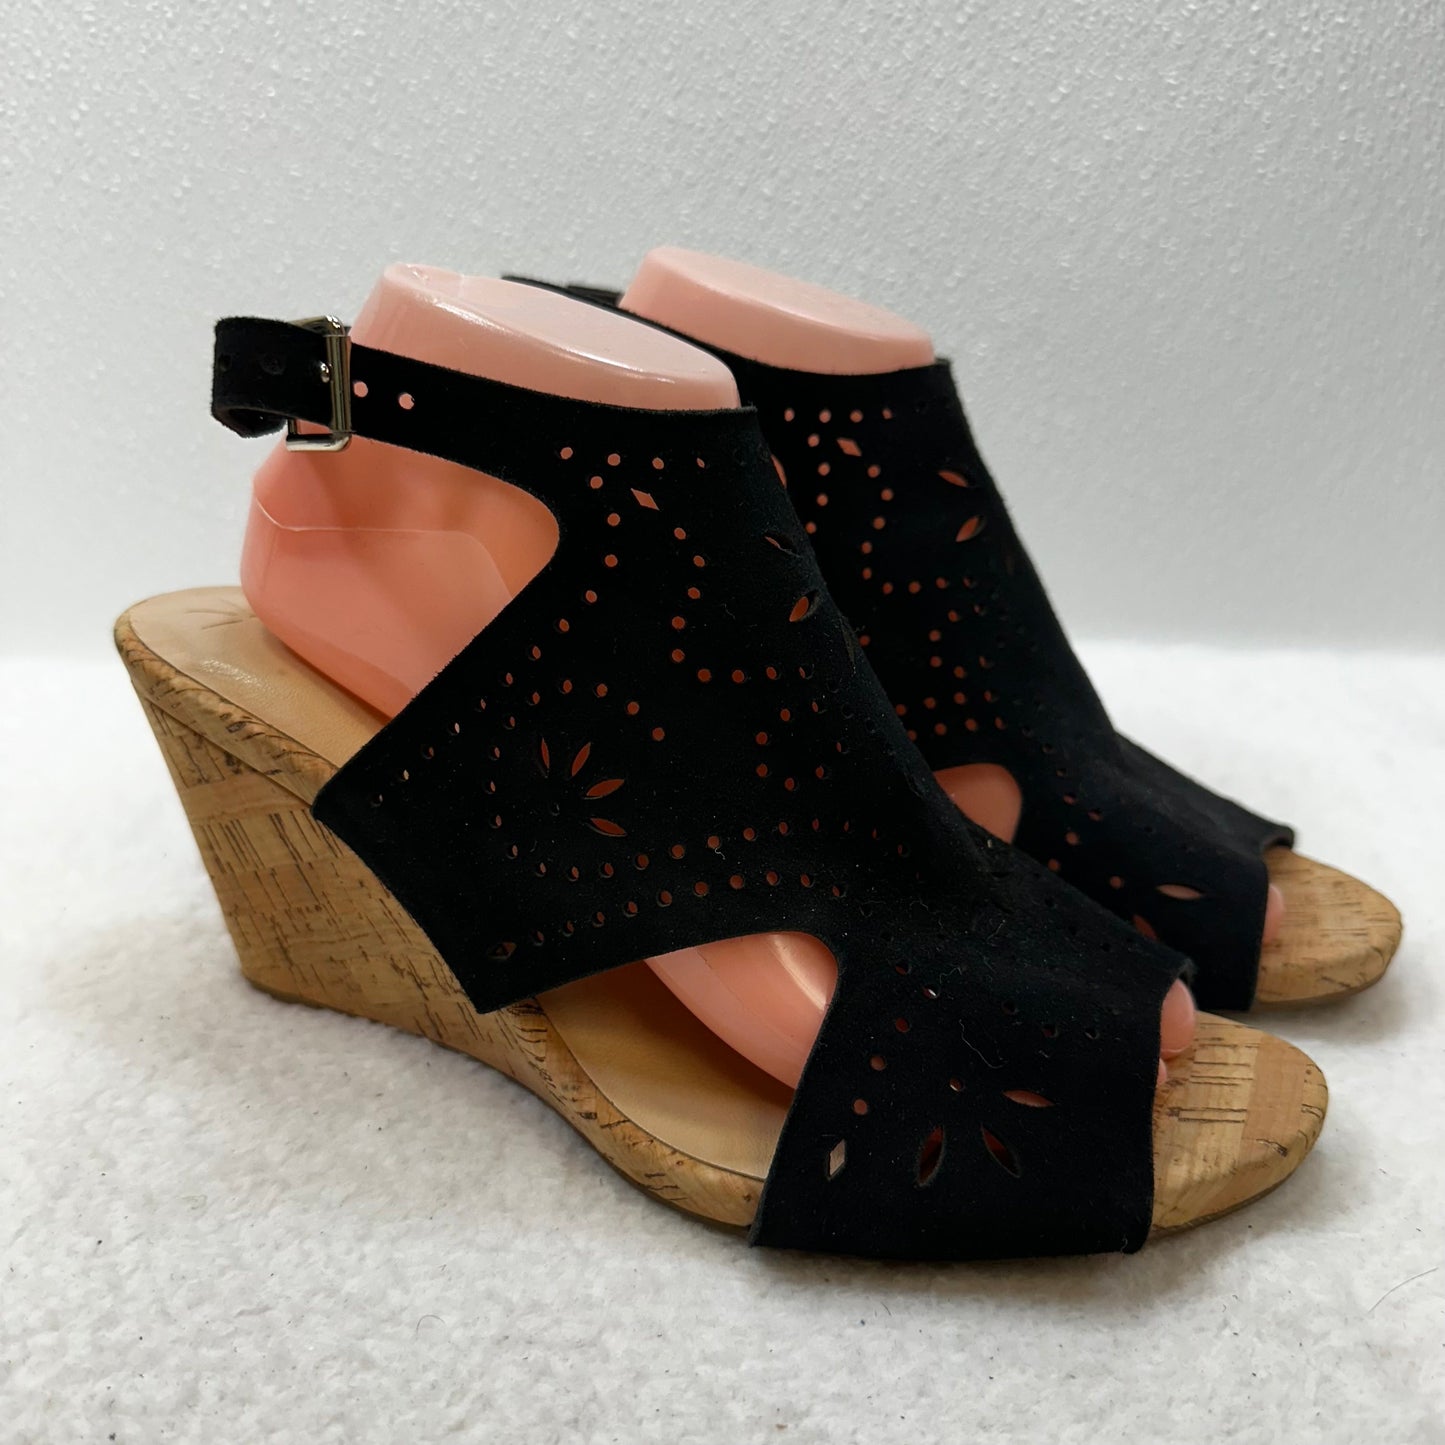 Black Shoes Heels Block Isaac Mizrahi Target, Size 10